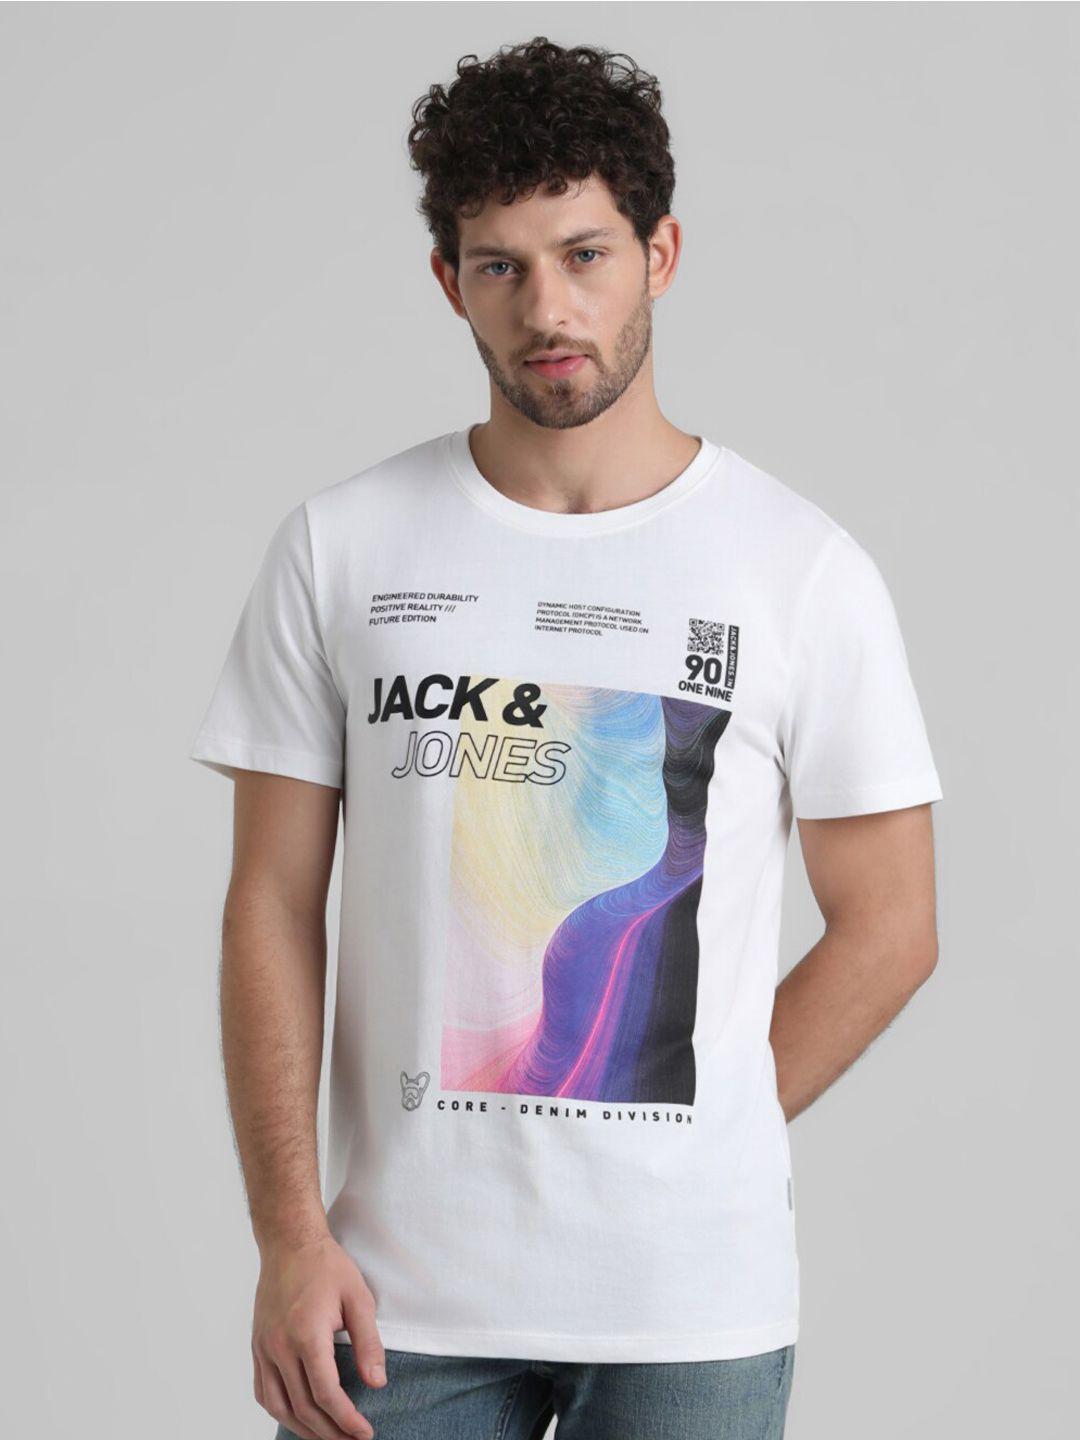 jack & jones graphic printed round neck cotton t-shirt